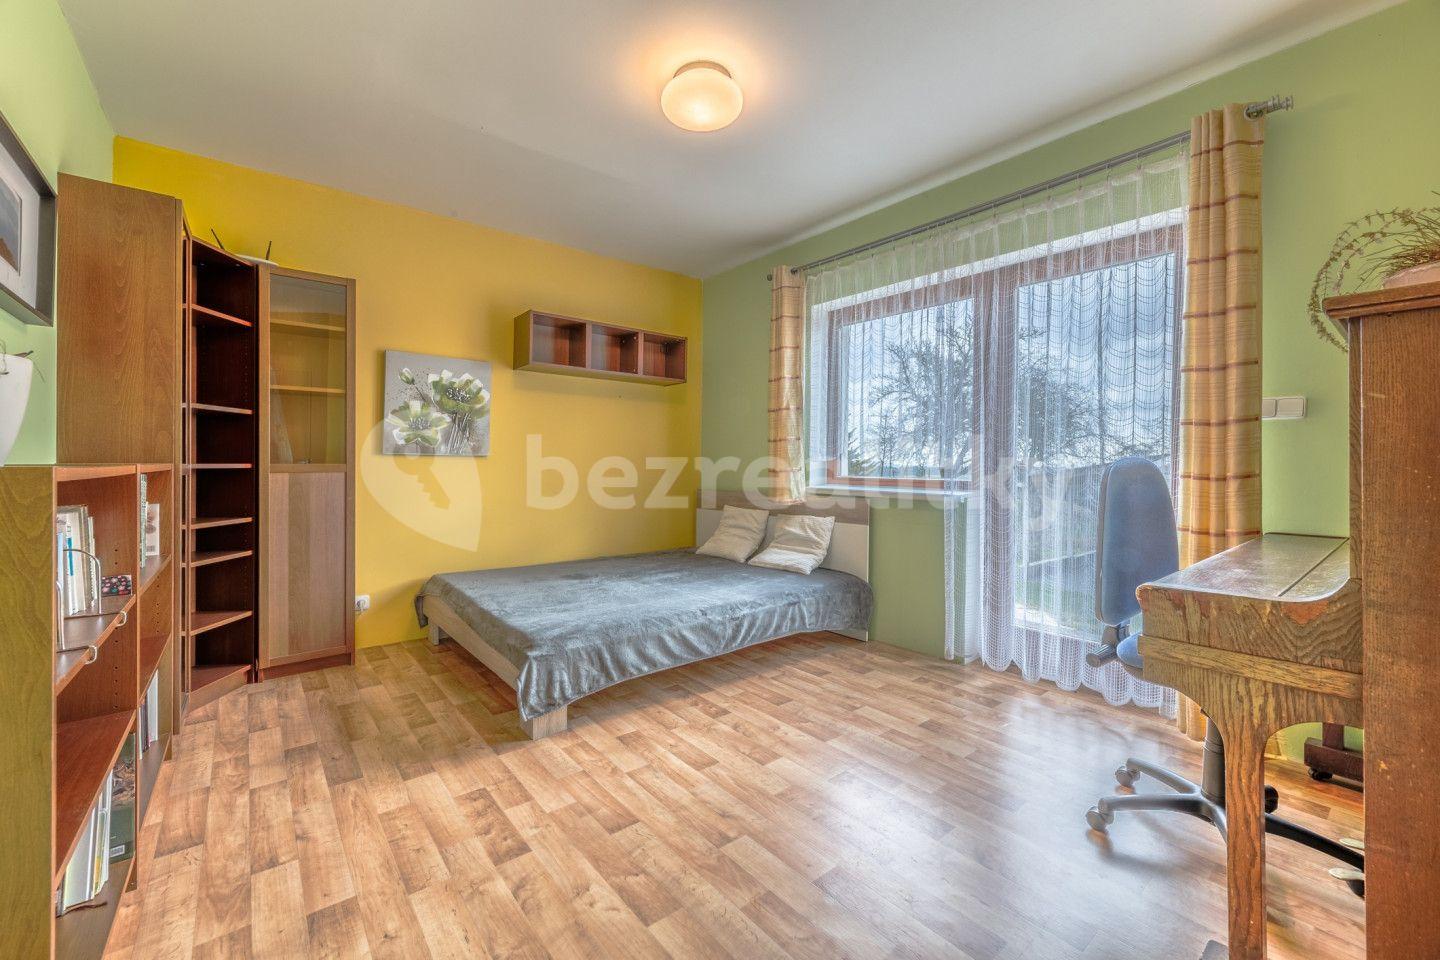 Predaj domu 130 m², pozemek 1.200 m², Bezděz, Liberecký kraj